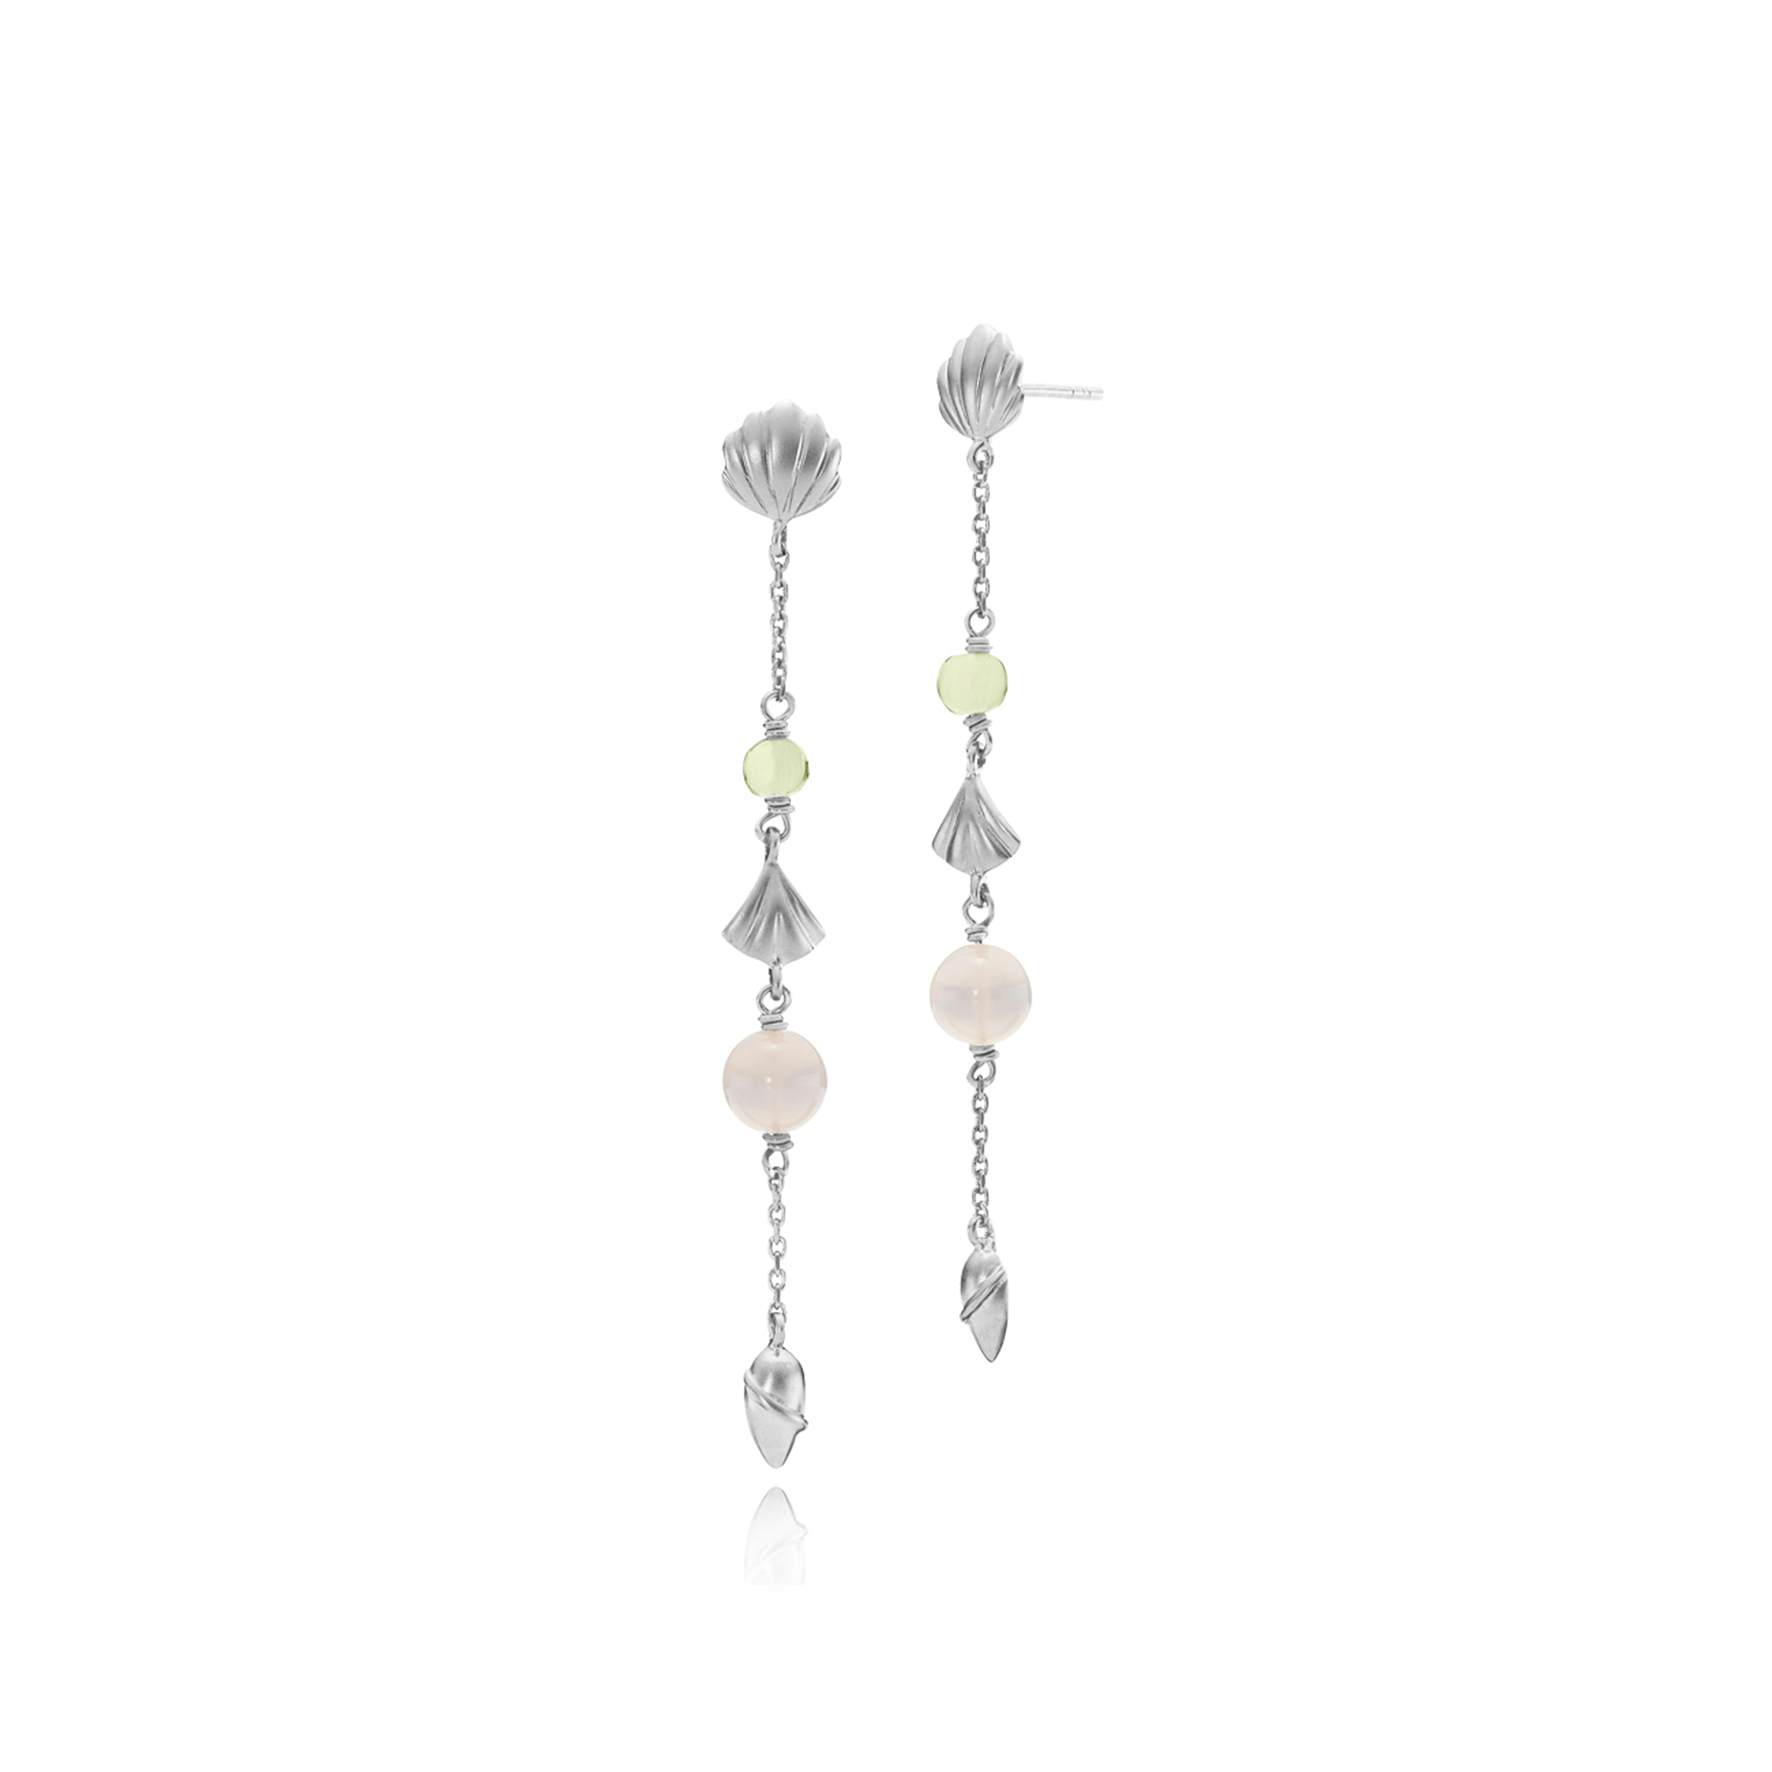 Isabella Pink/Green Long Earrings fra Izabel Camille i Sølv Sterling 925